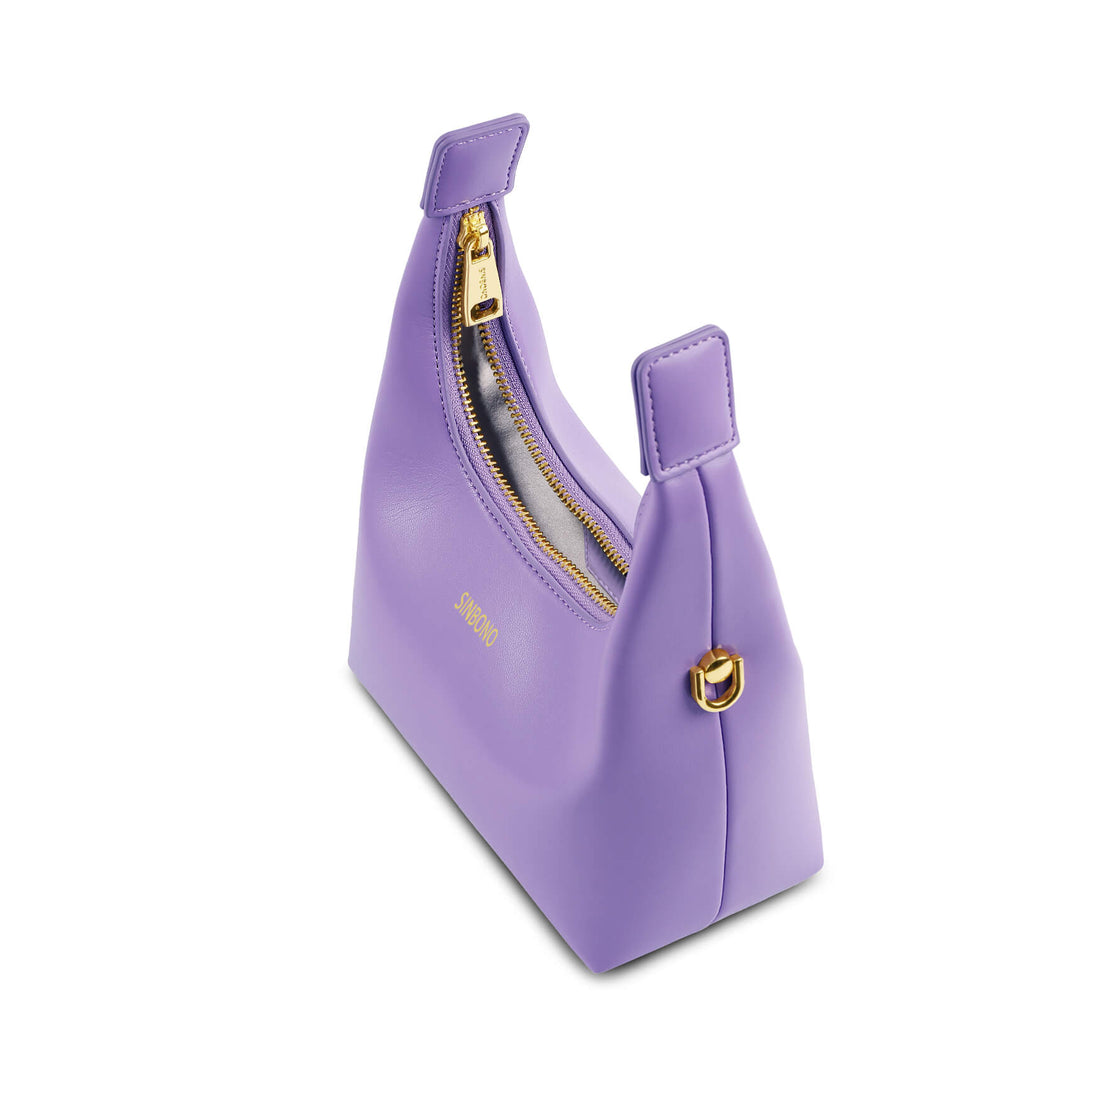 SINBONO Purple Crossbody Bag-Made from Soft Vegan Leather